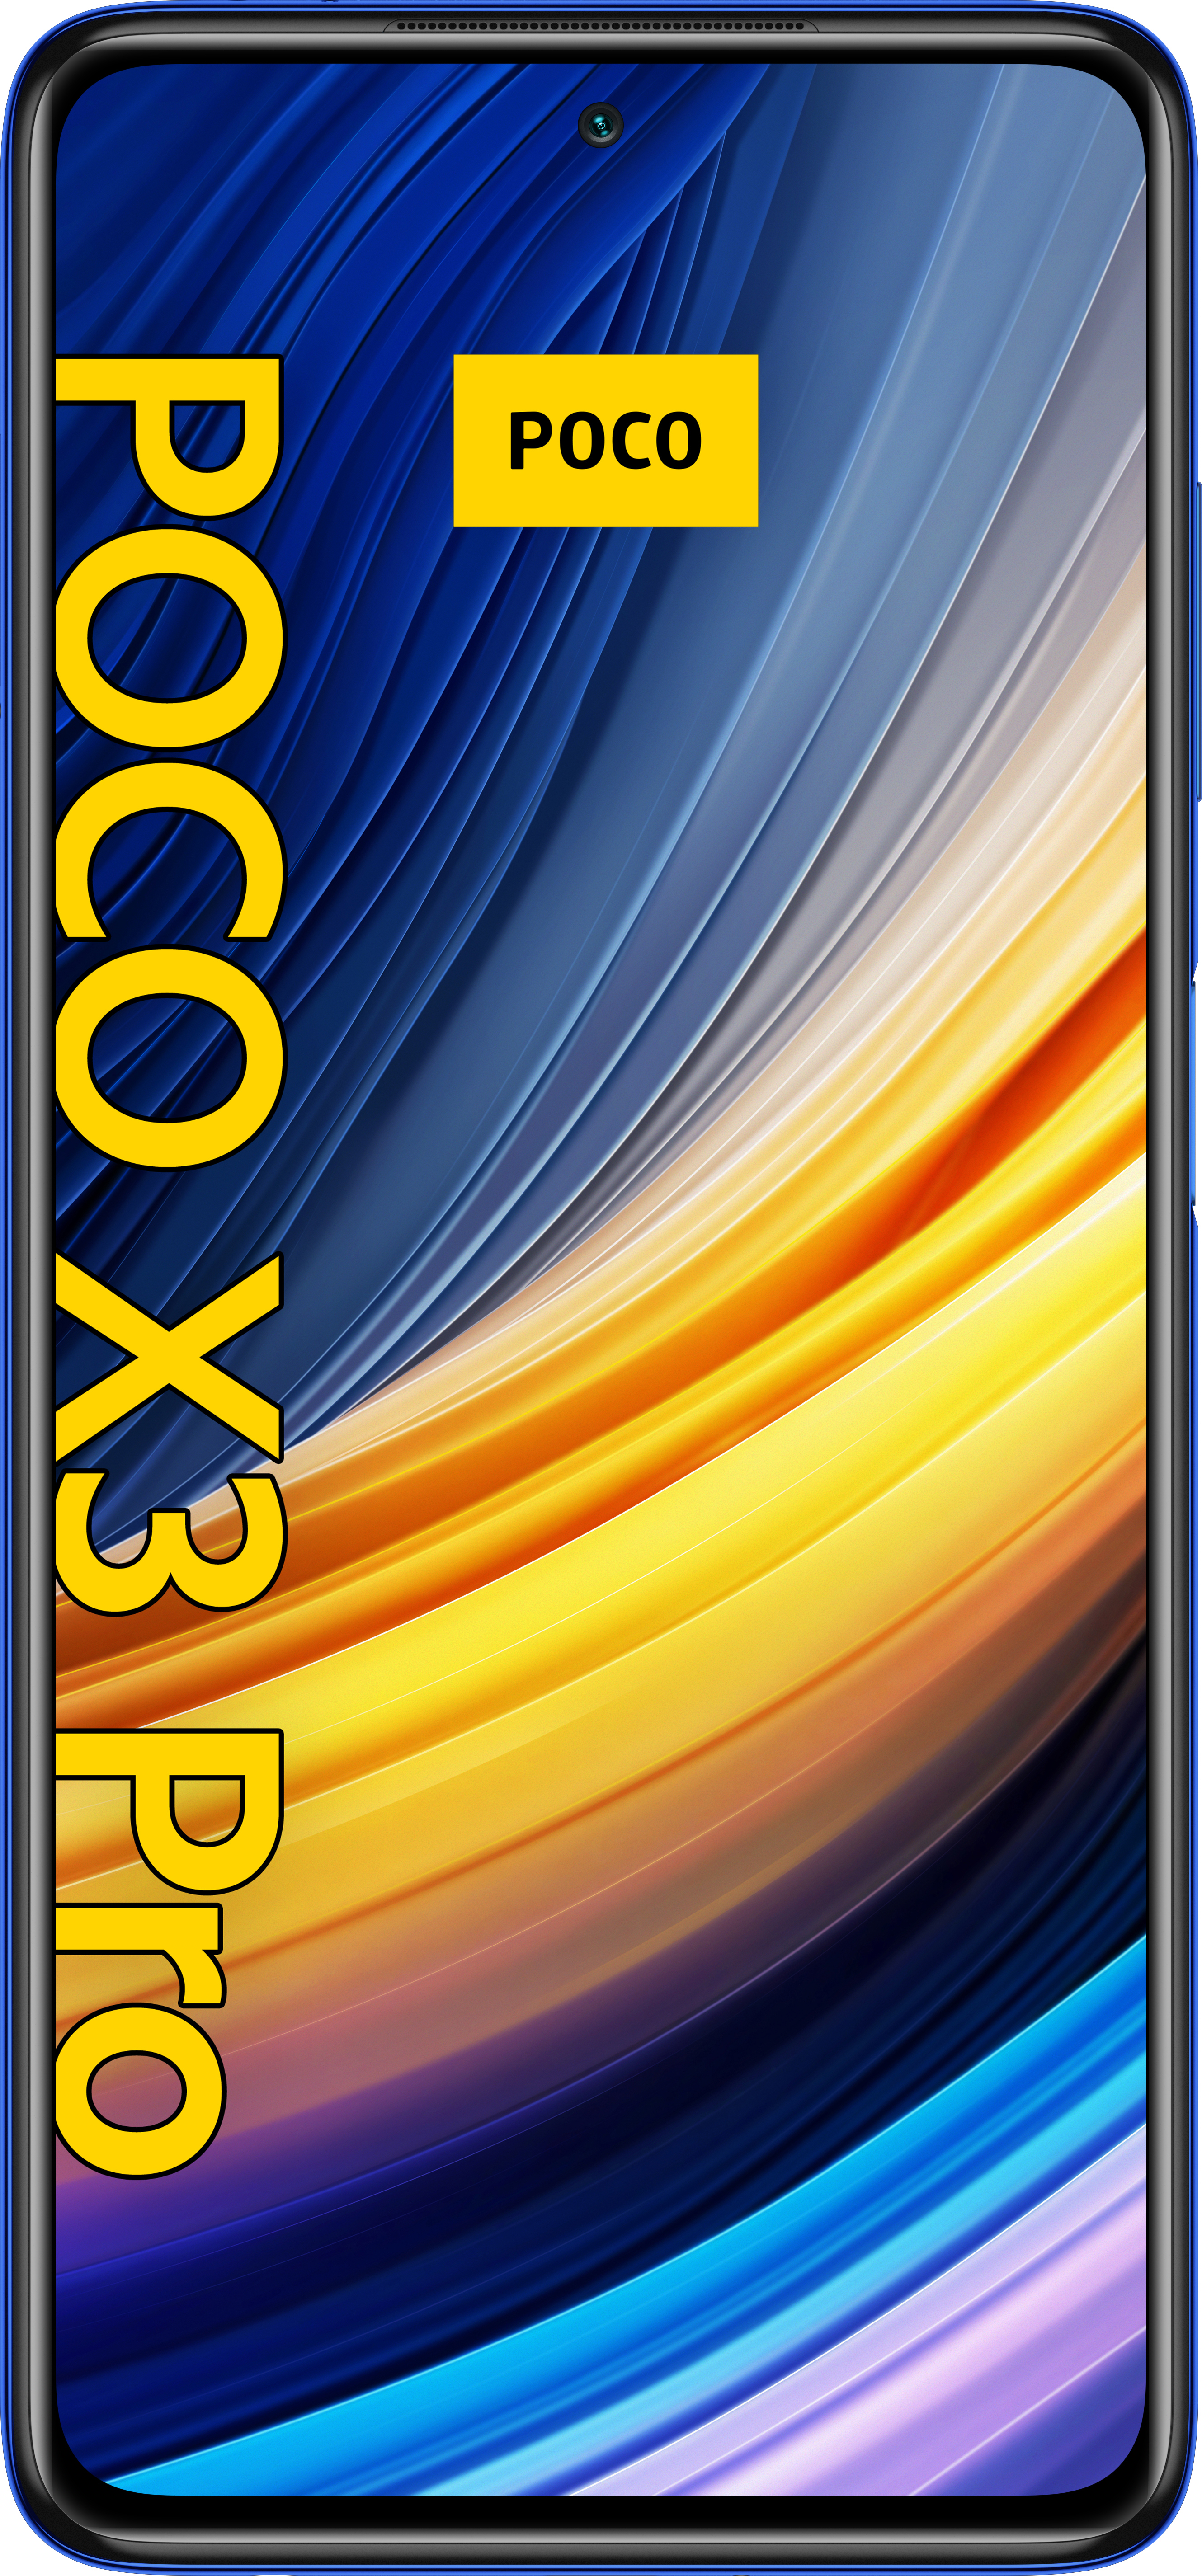 PRO Blue 8 GB XIAOMI POCO 256 Dual Frost X3 SIM